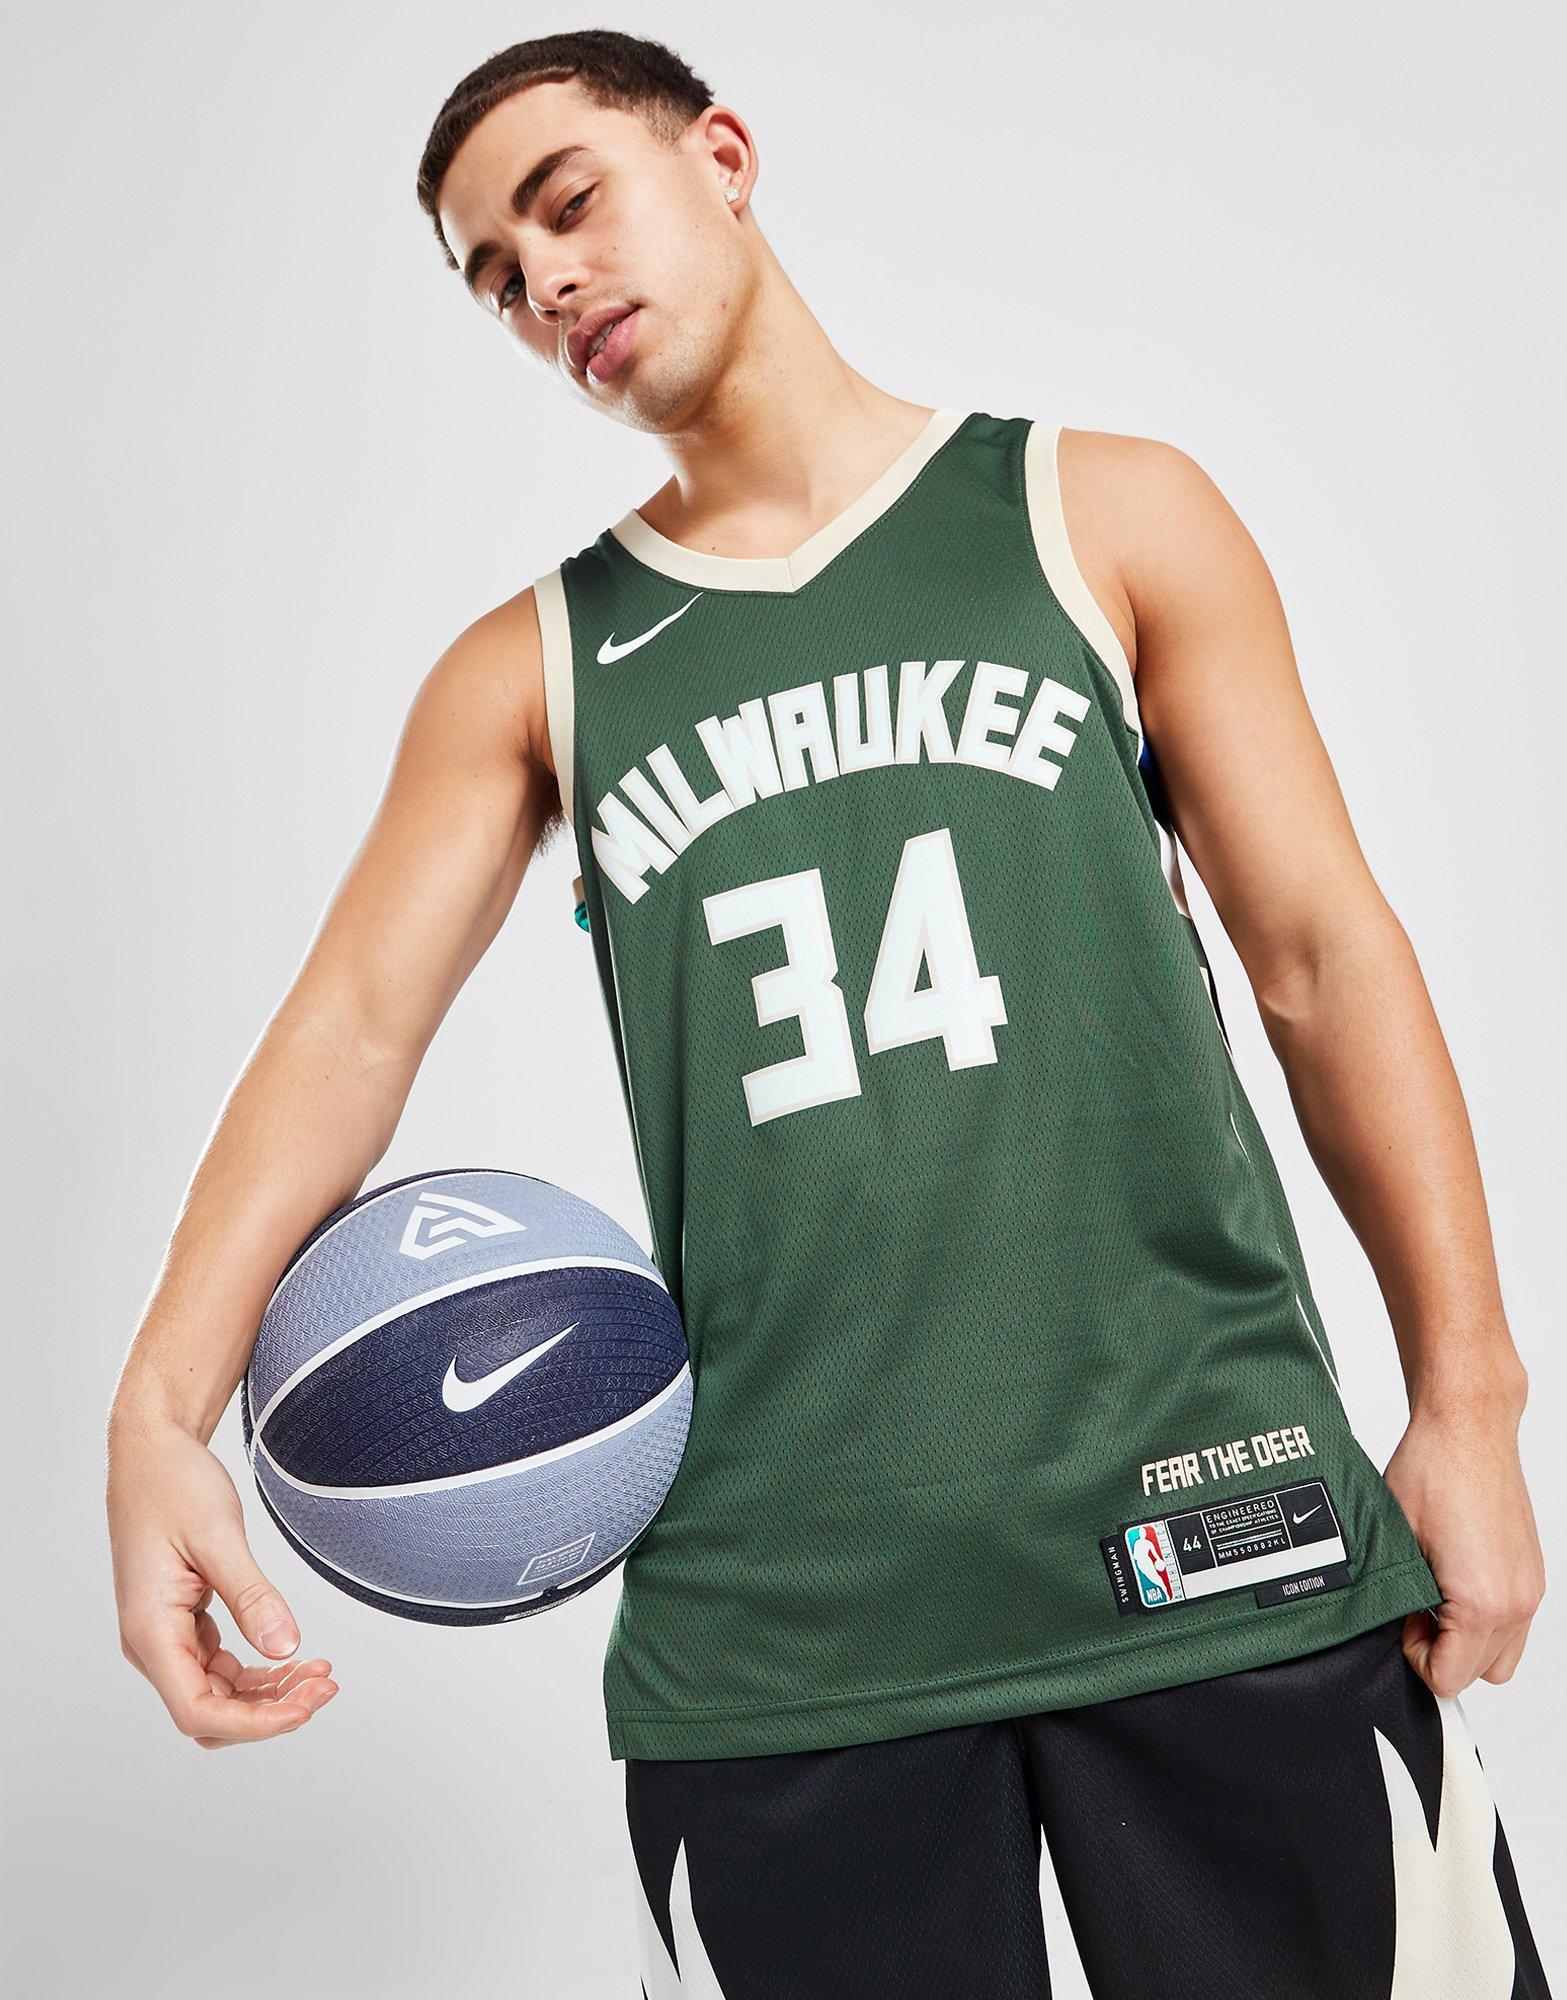 Nike NBA Milwaukee Bucks Icon Antetokounmpo #34 Jersey - Fir - Mens